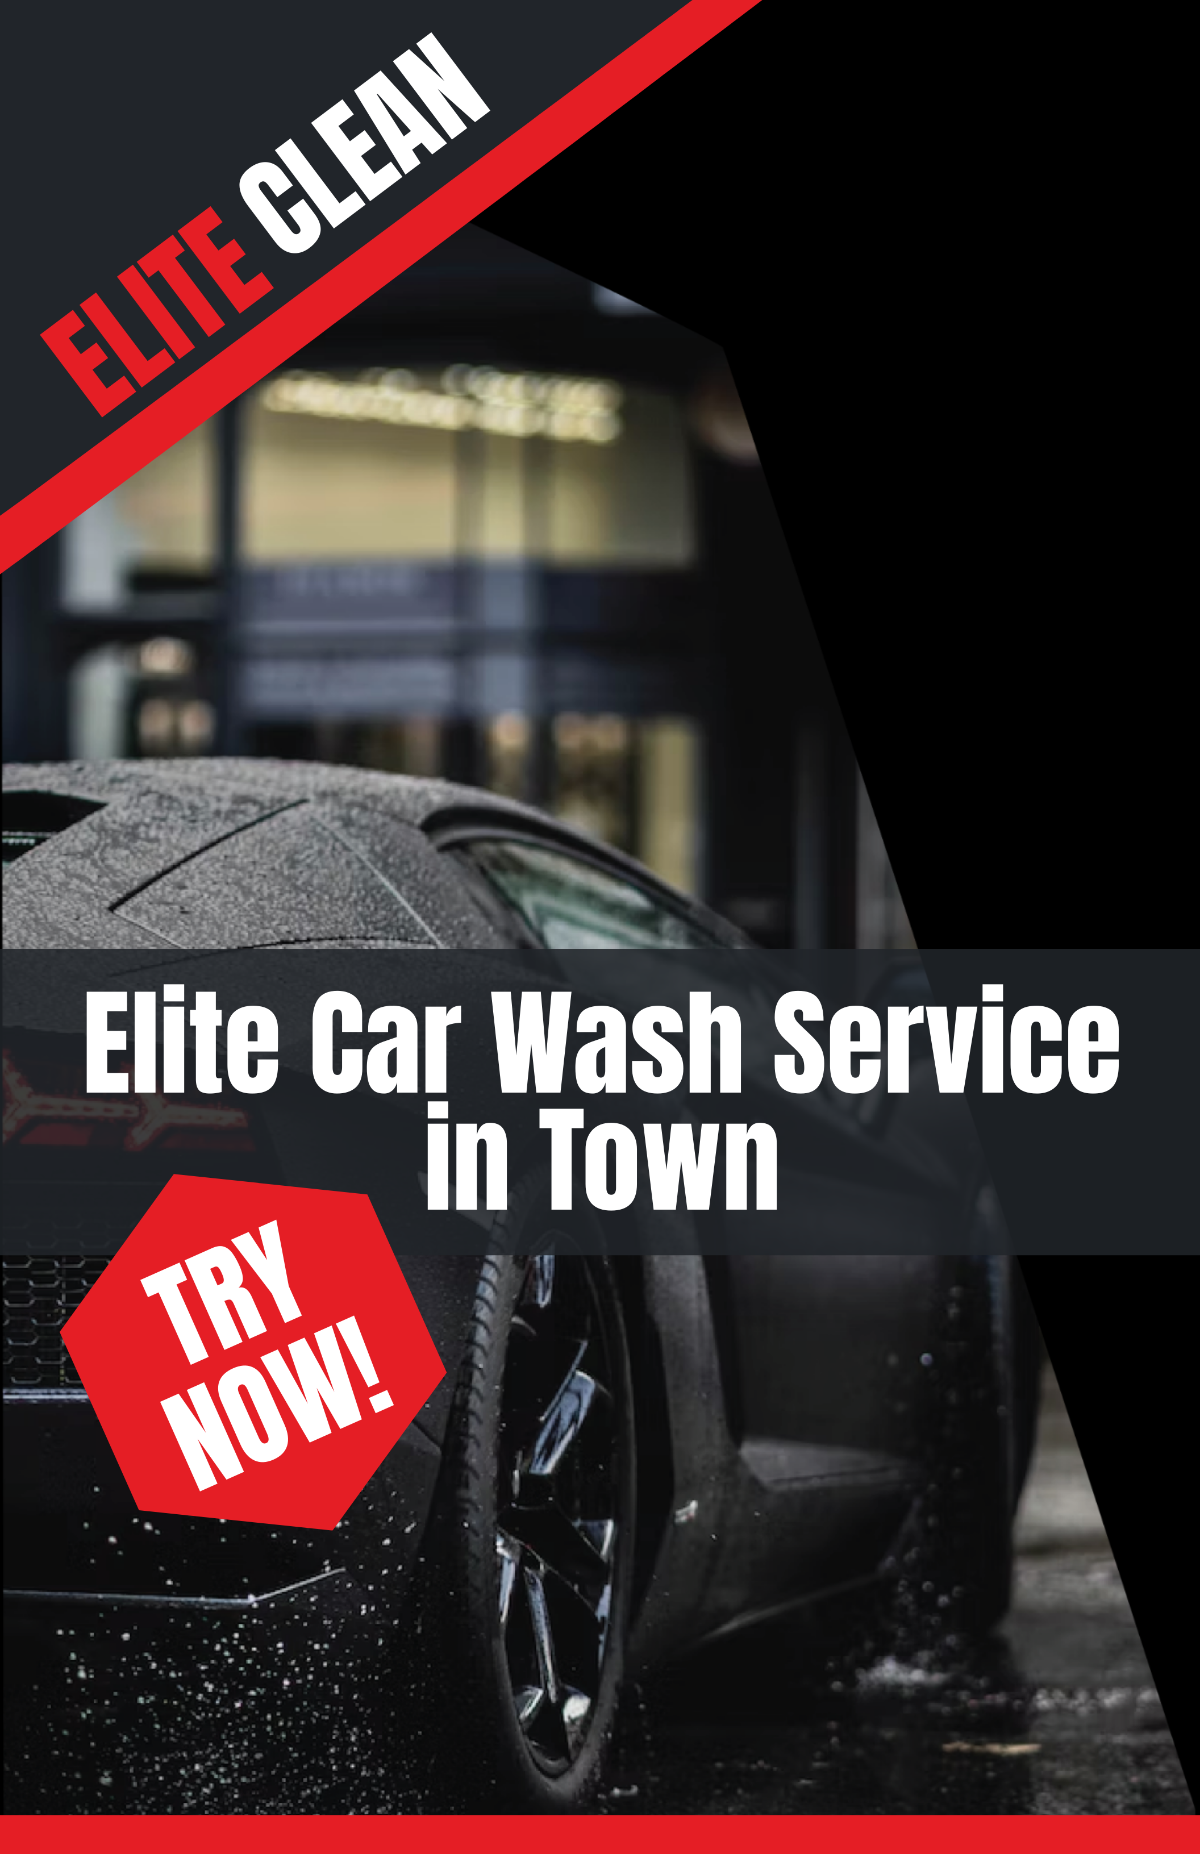 Sportscar Car Wash Poster Template